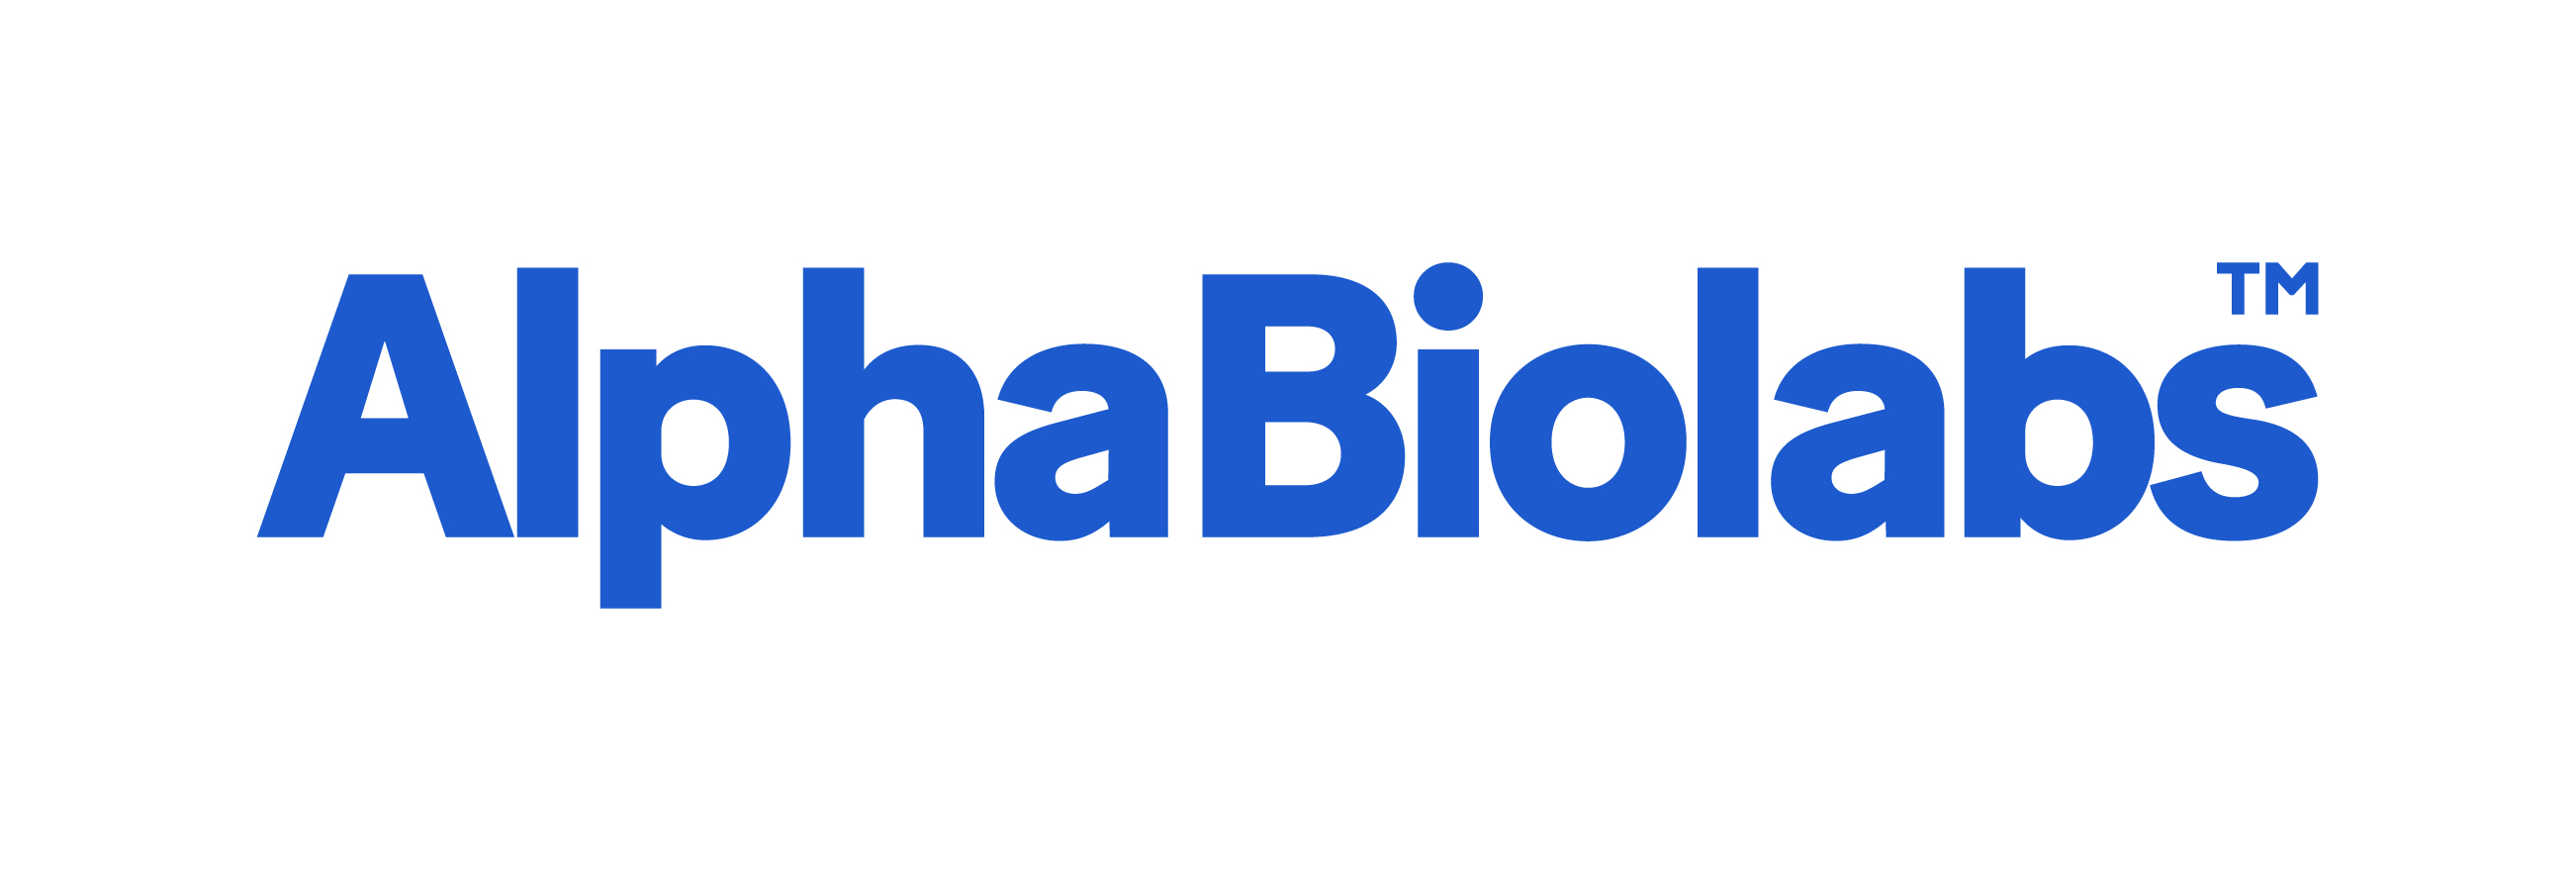 AlphaBiolabs - Logo - With Border